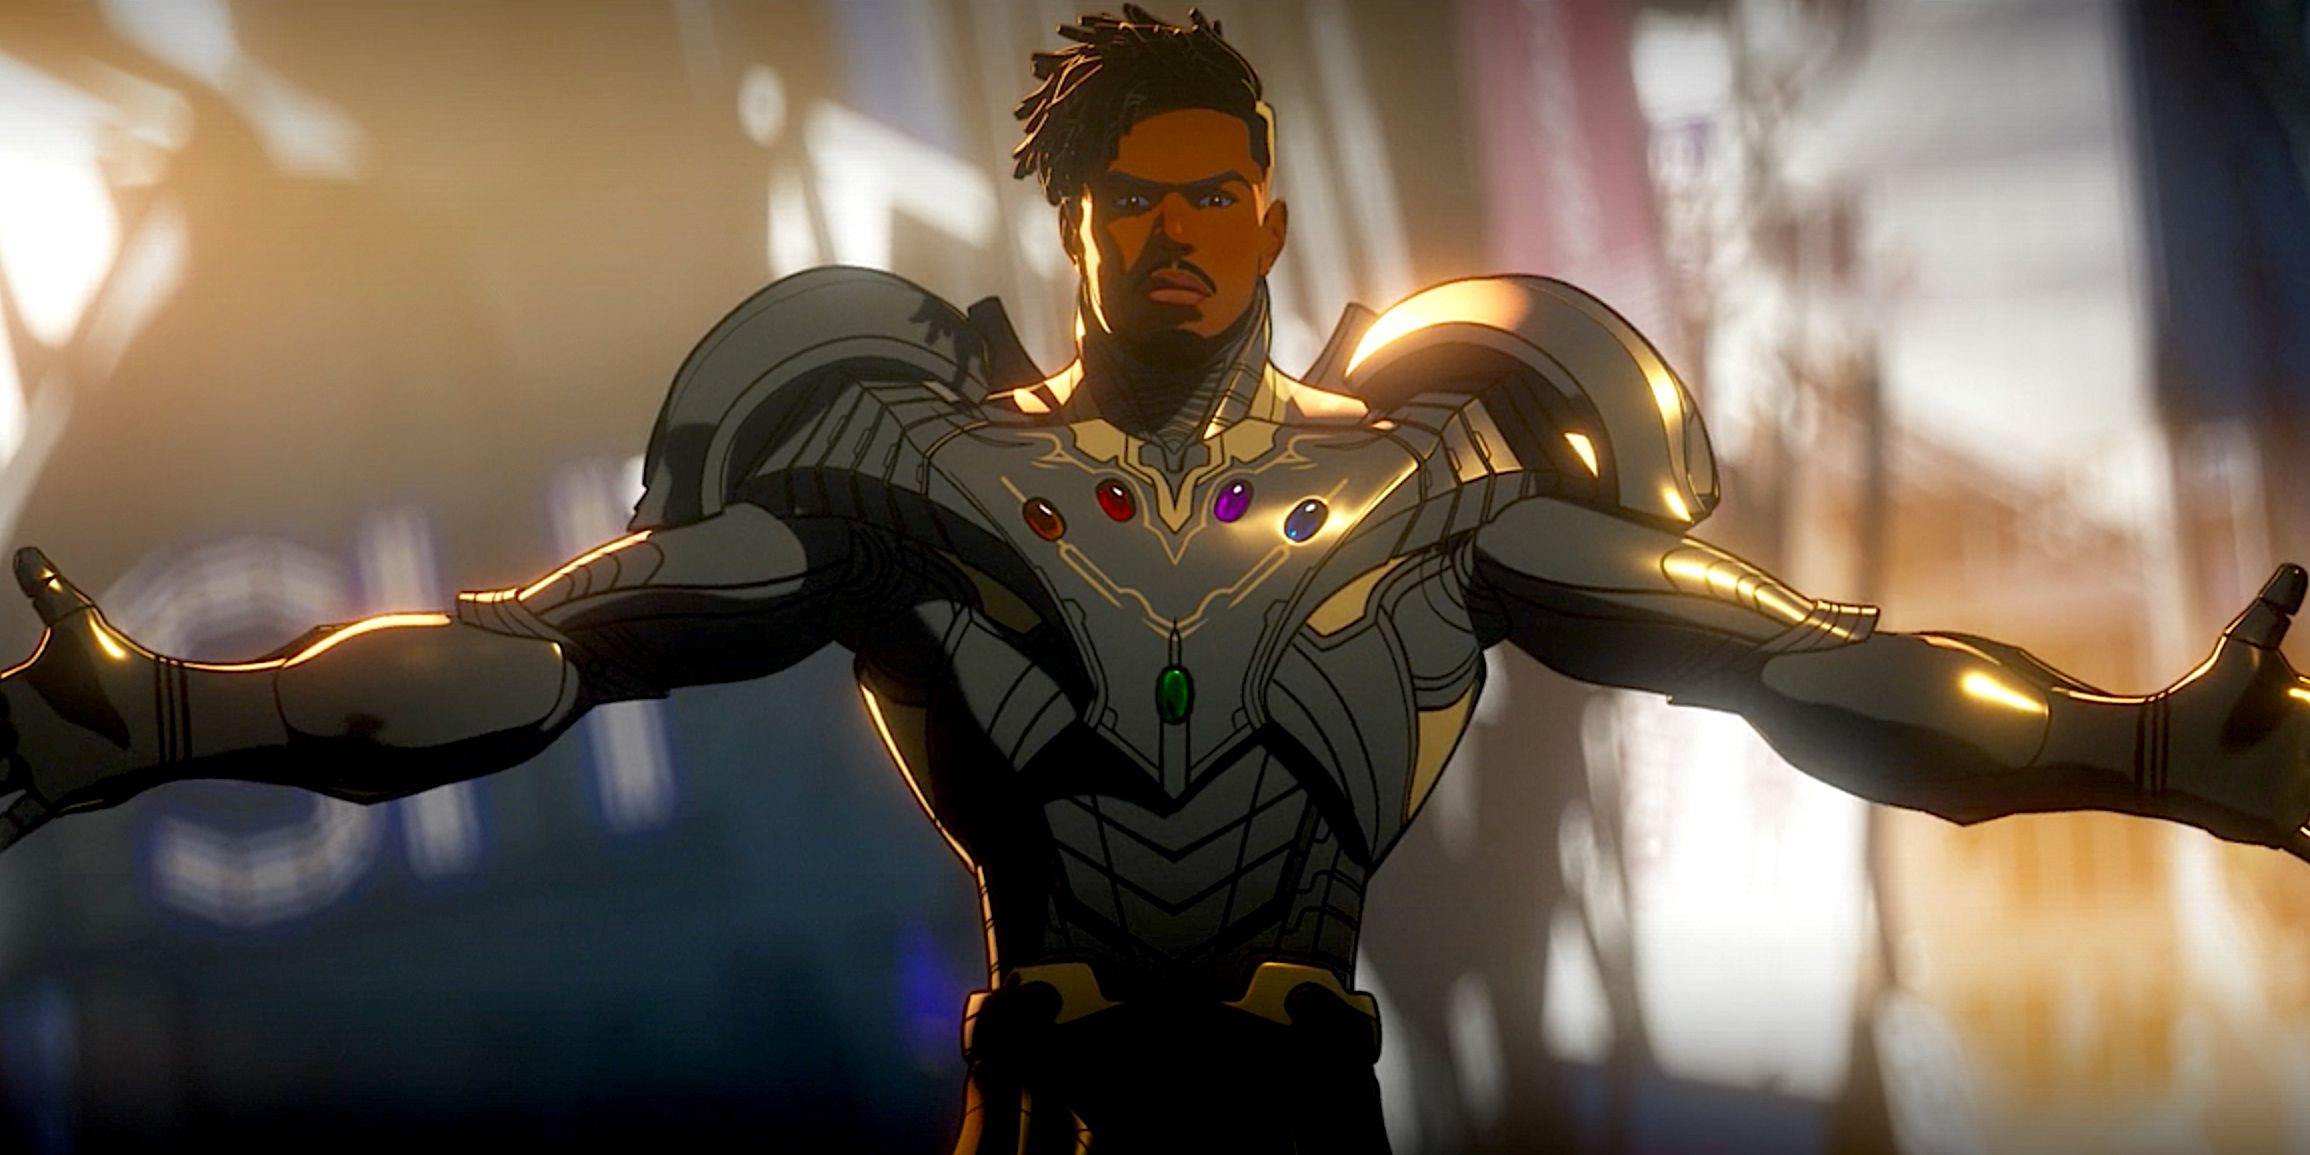 Killmonger wearing his Infinity Suit armor